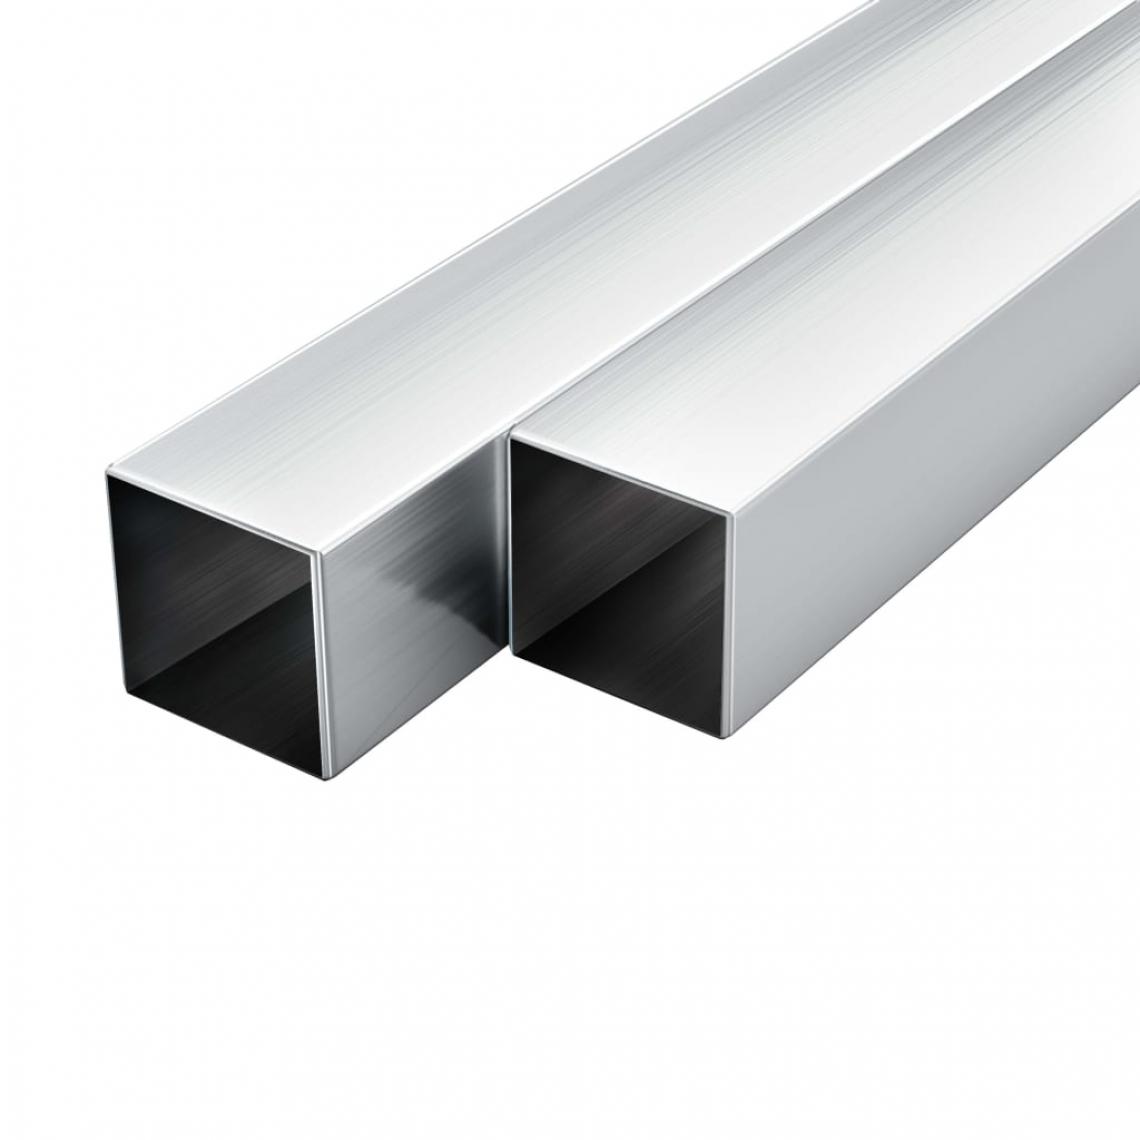 Vidaxl - vidaXL Tube avec section carrée Aluminium 6 pcs 1 m 30x30x2 mm - Cheville